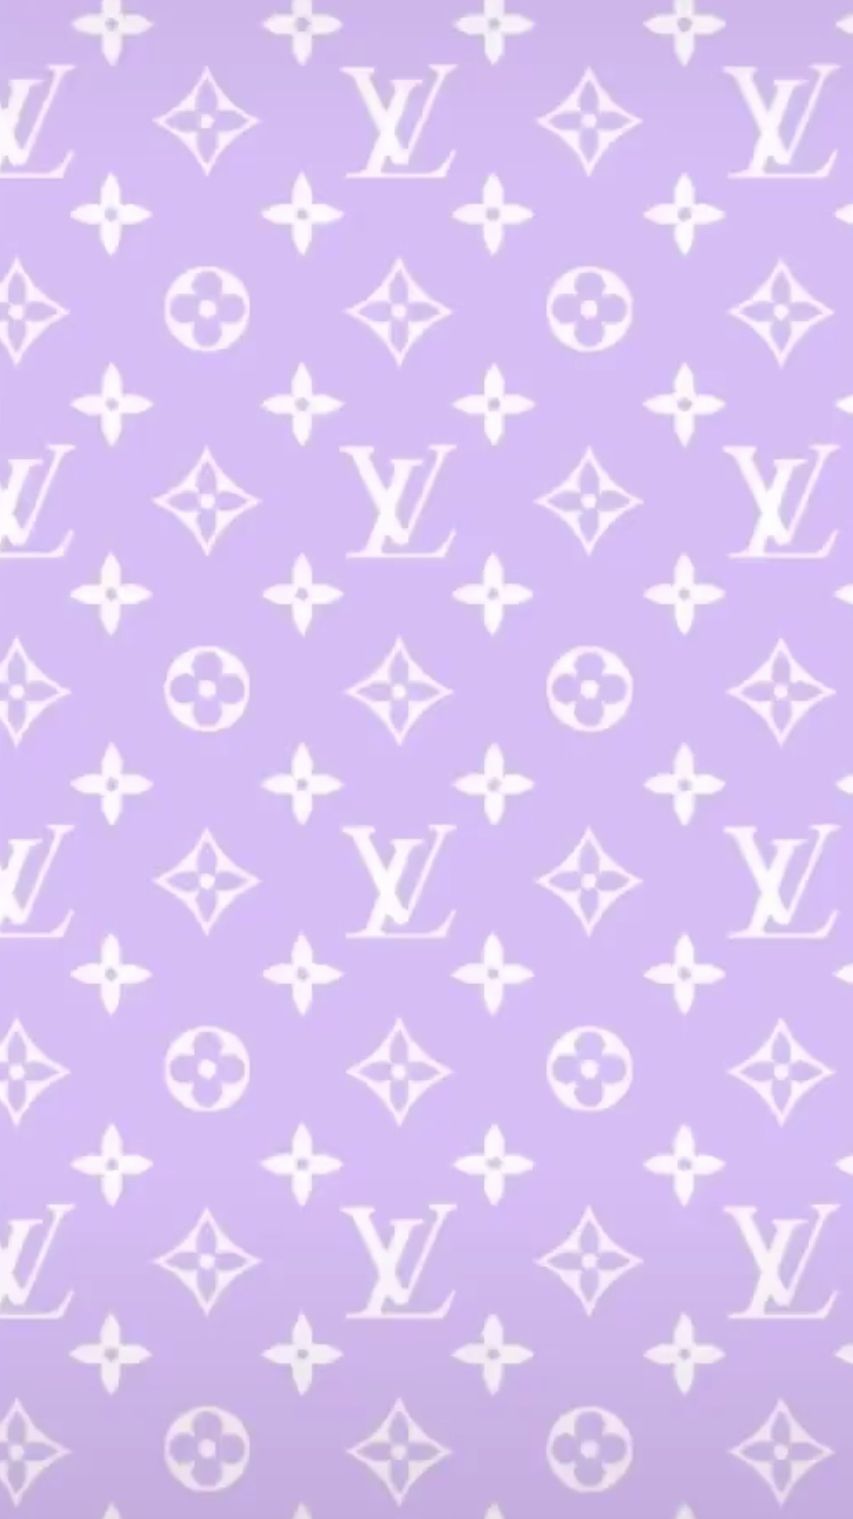 Purple Louis Vuitton wallpaper I made for my phone! - Louis Vuitton